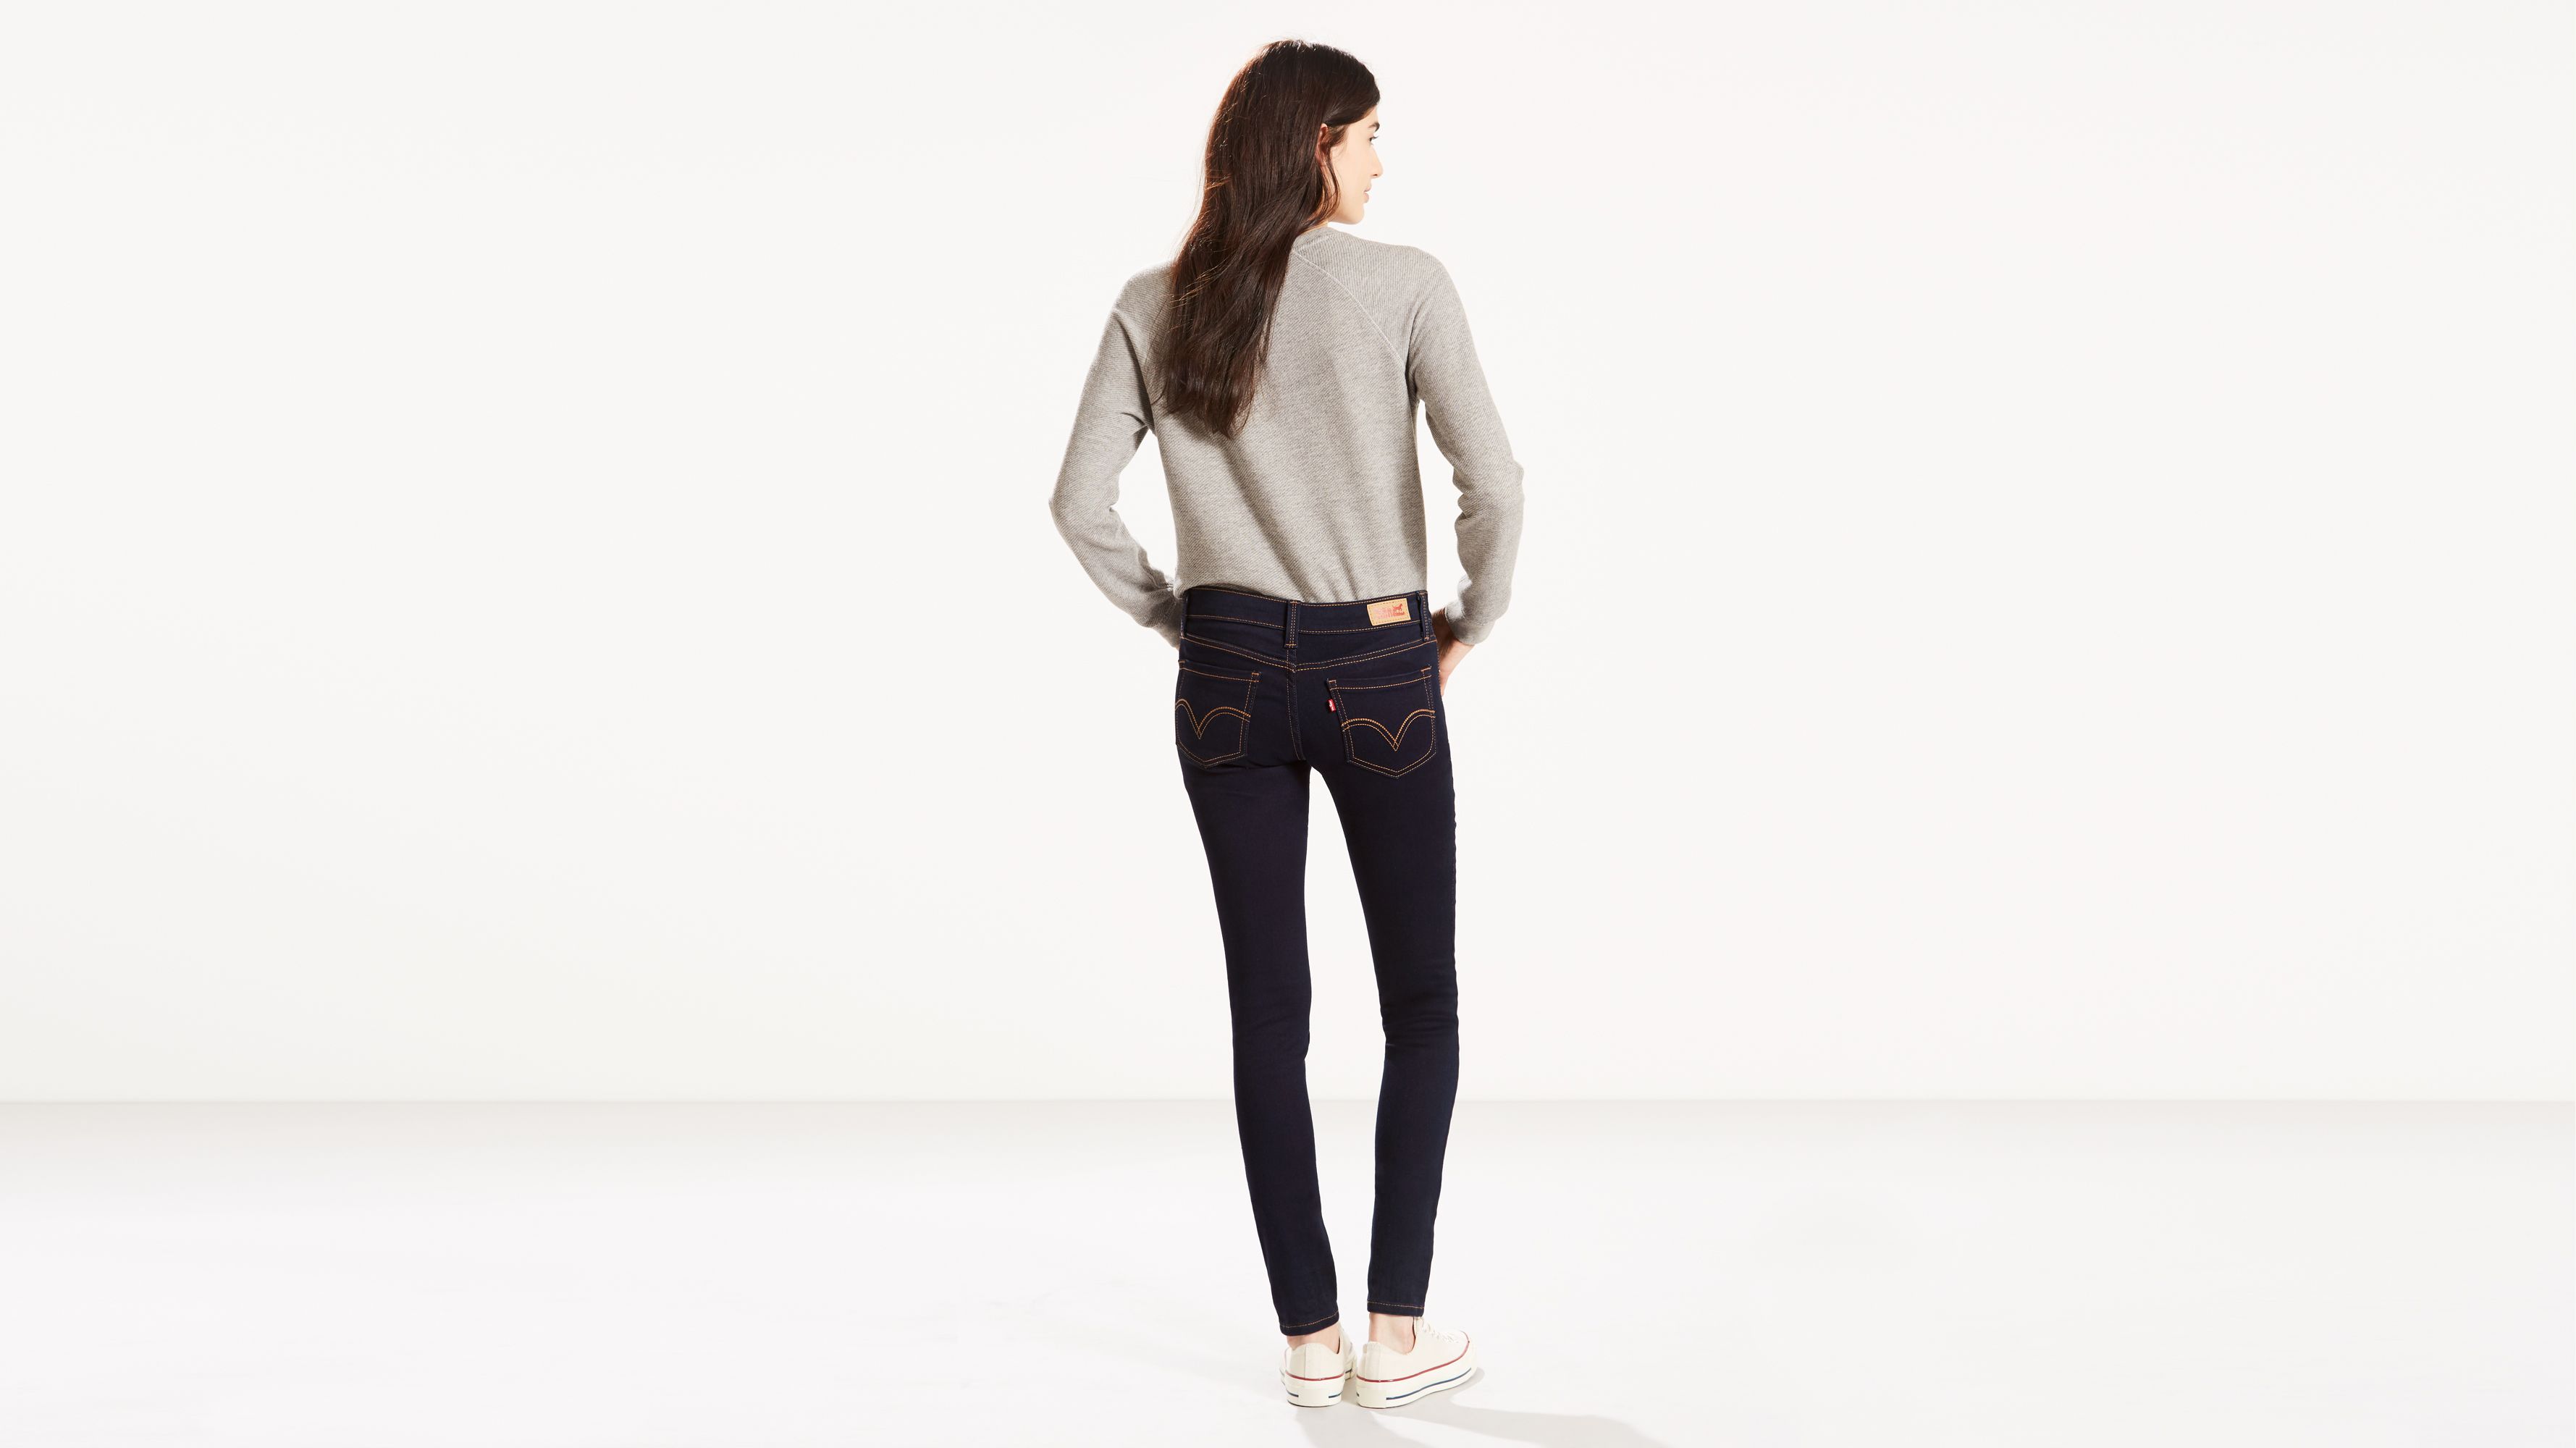 levi's brand jeans price